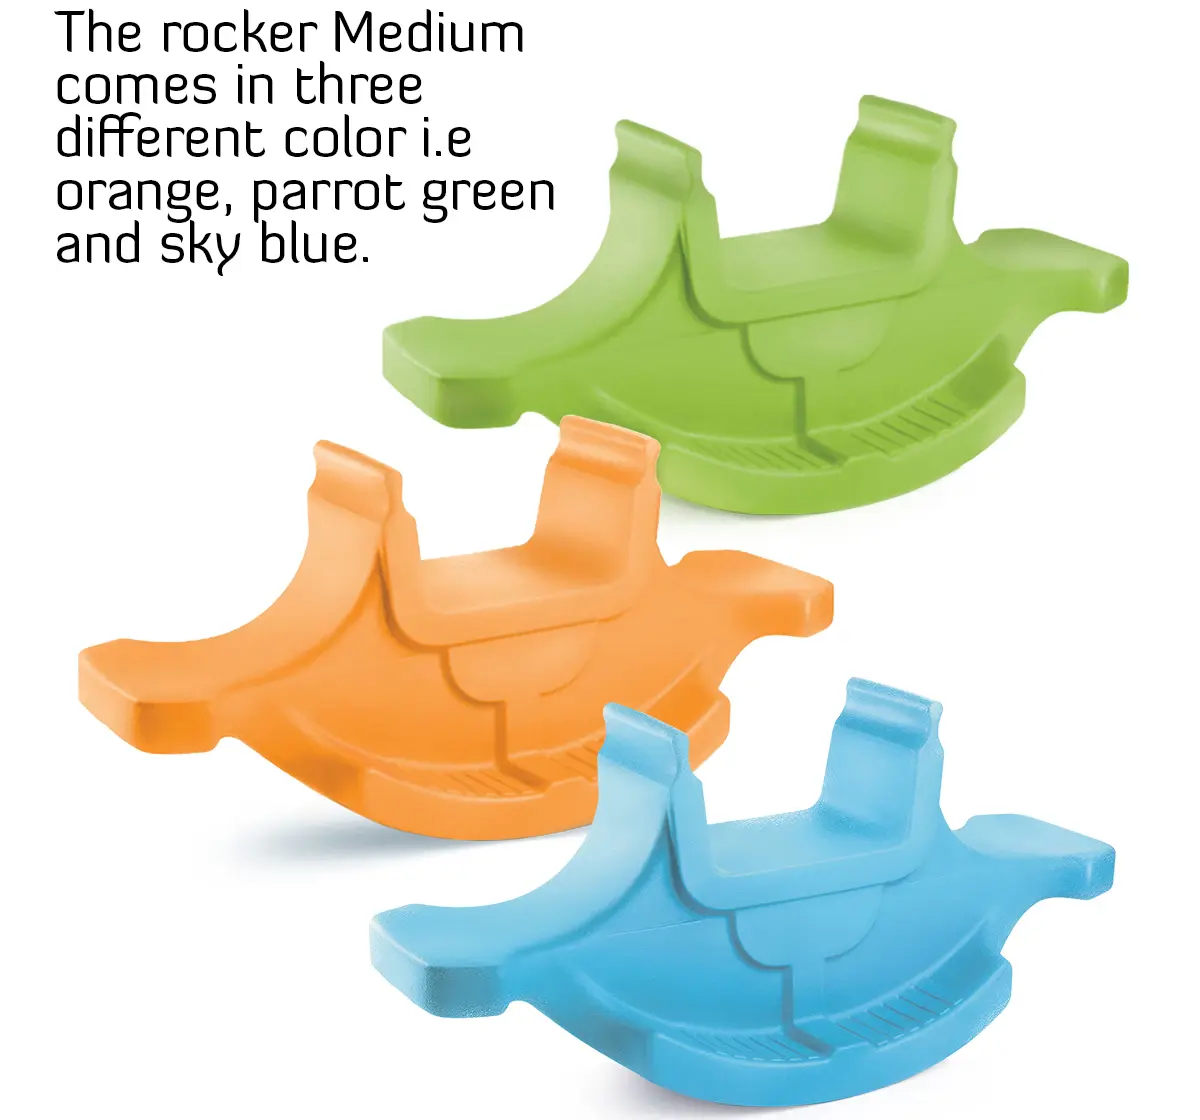 Ok Play Rocker Medium for Kids Boat Ride On Toy Orange 3Y+